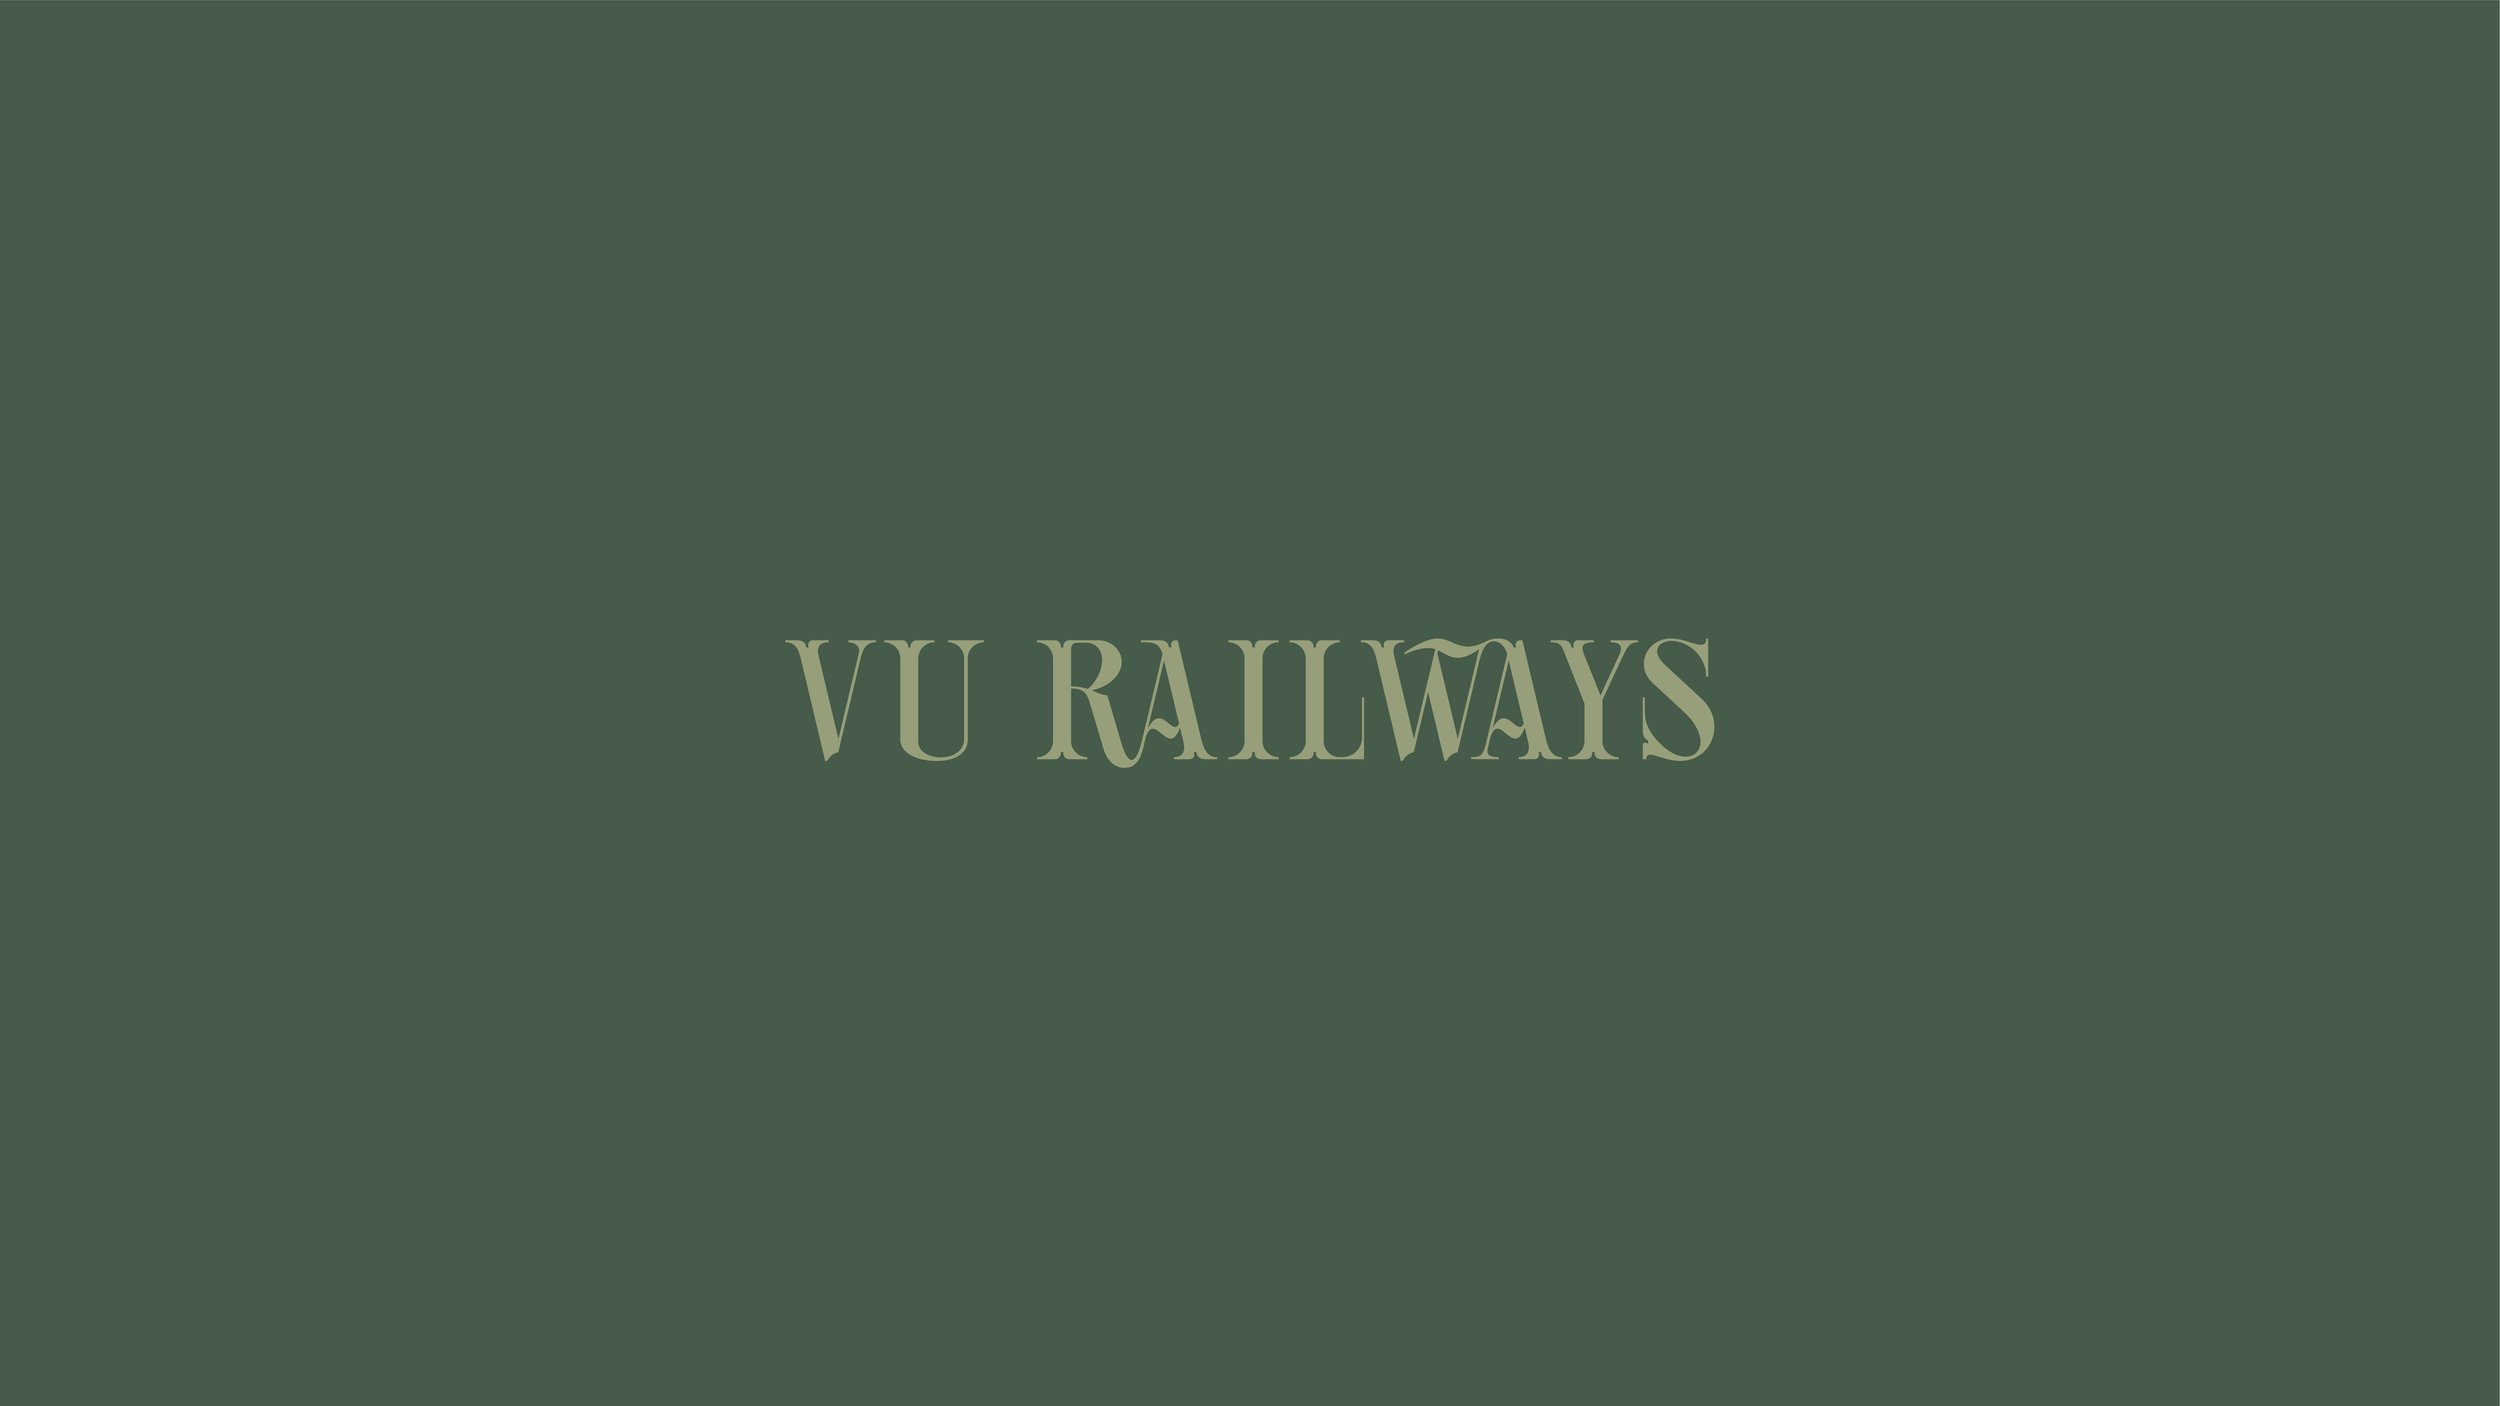  VU Railways text on green background holiday event branding. 